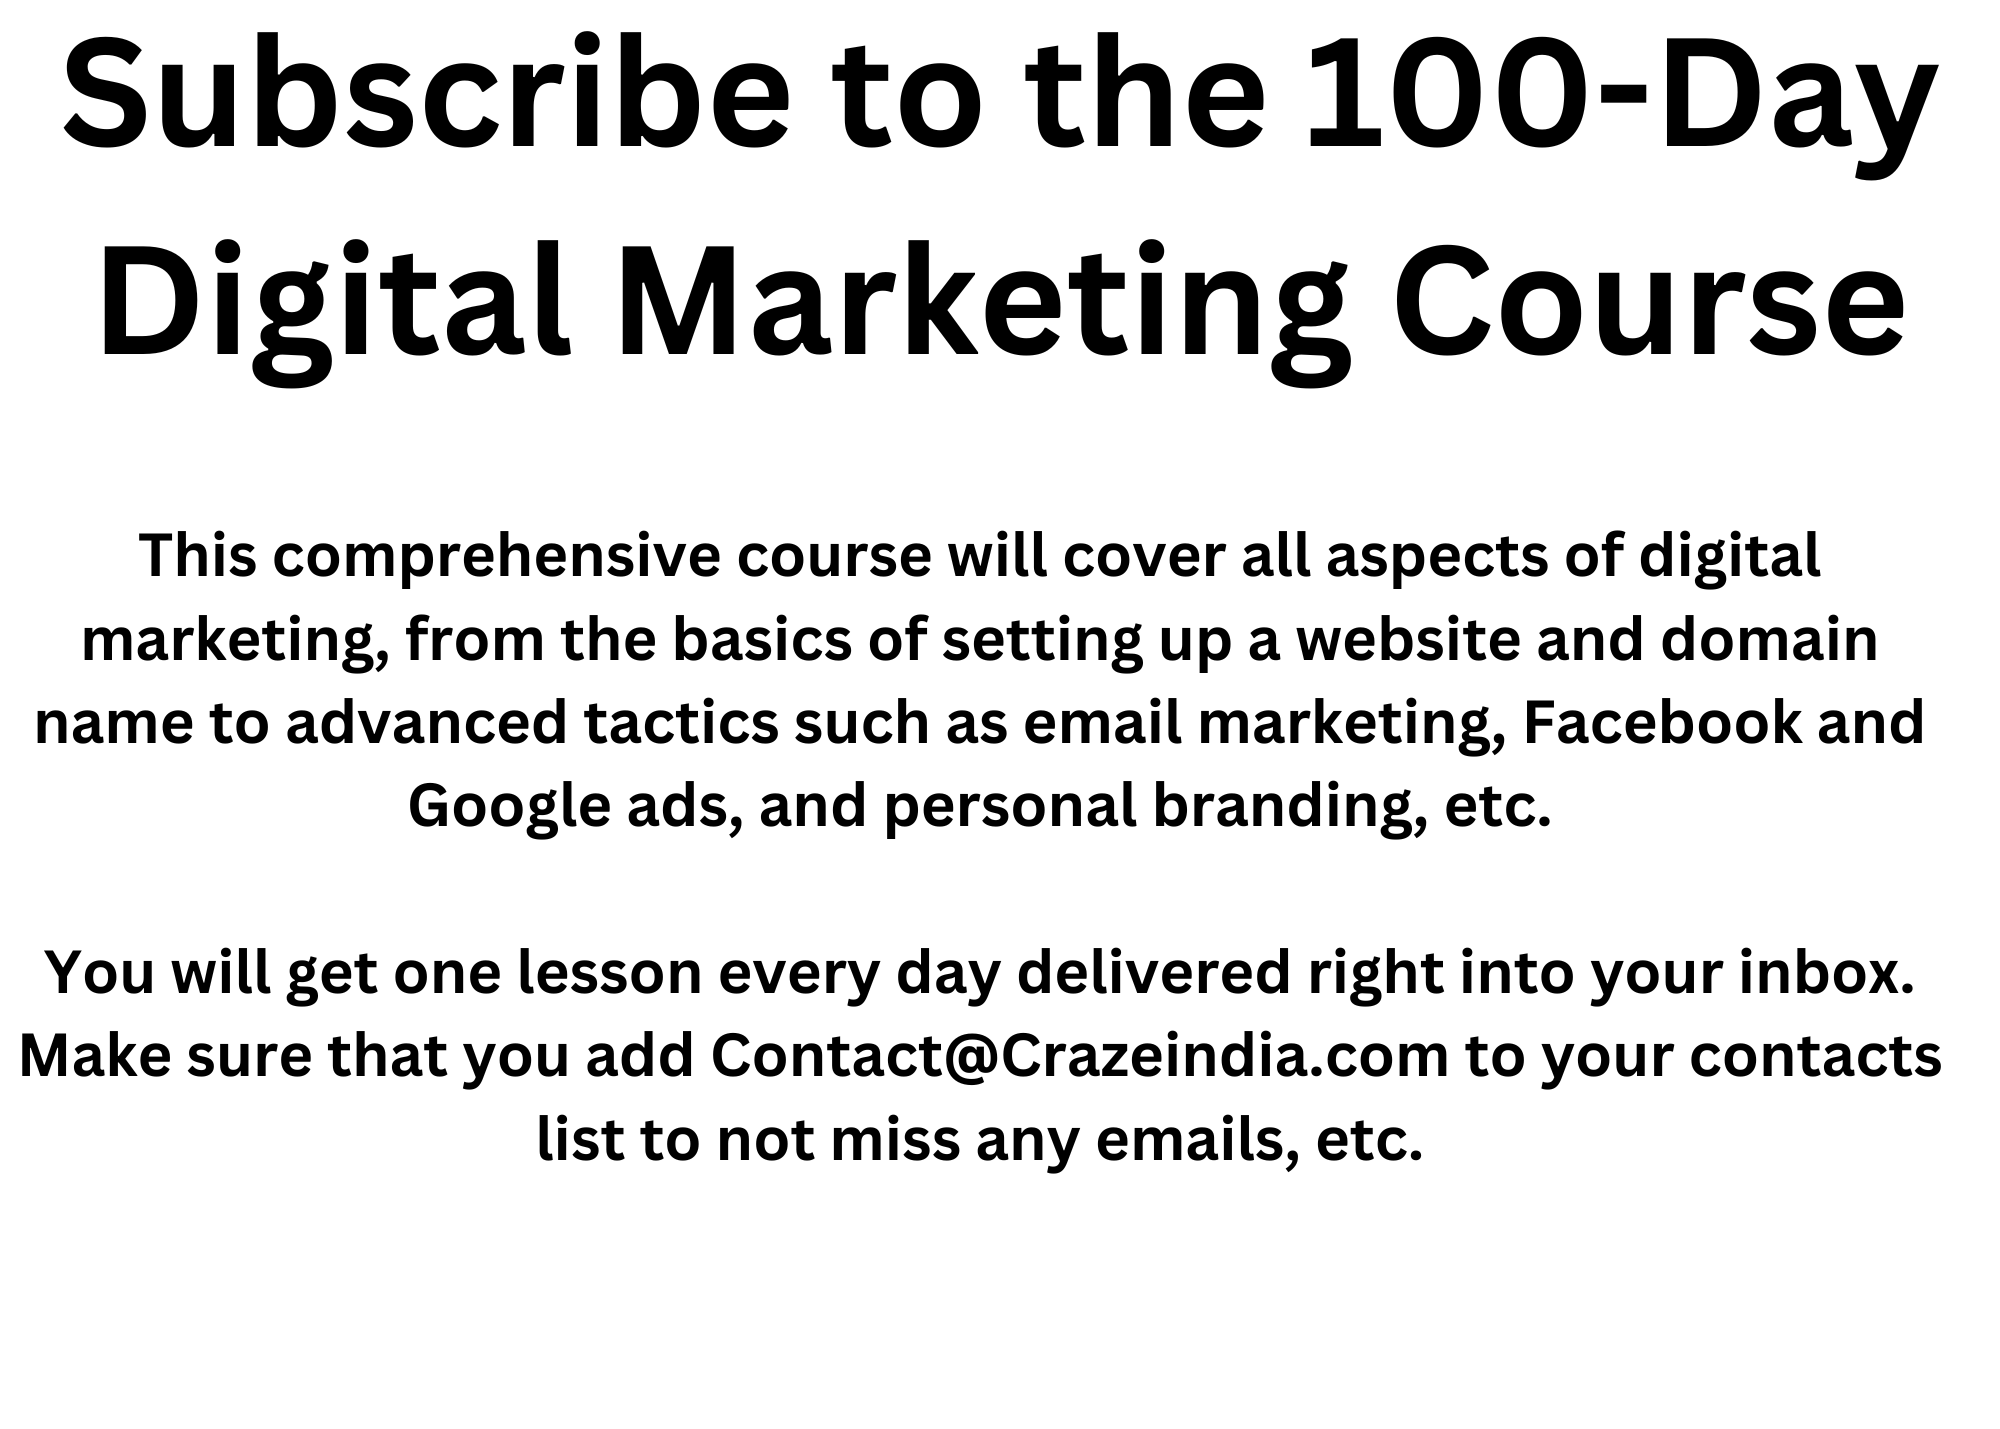 Digital Marketing Course Live